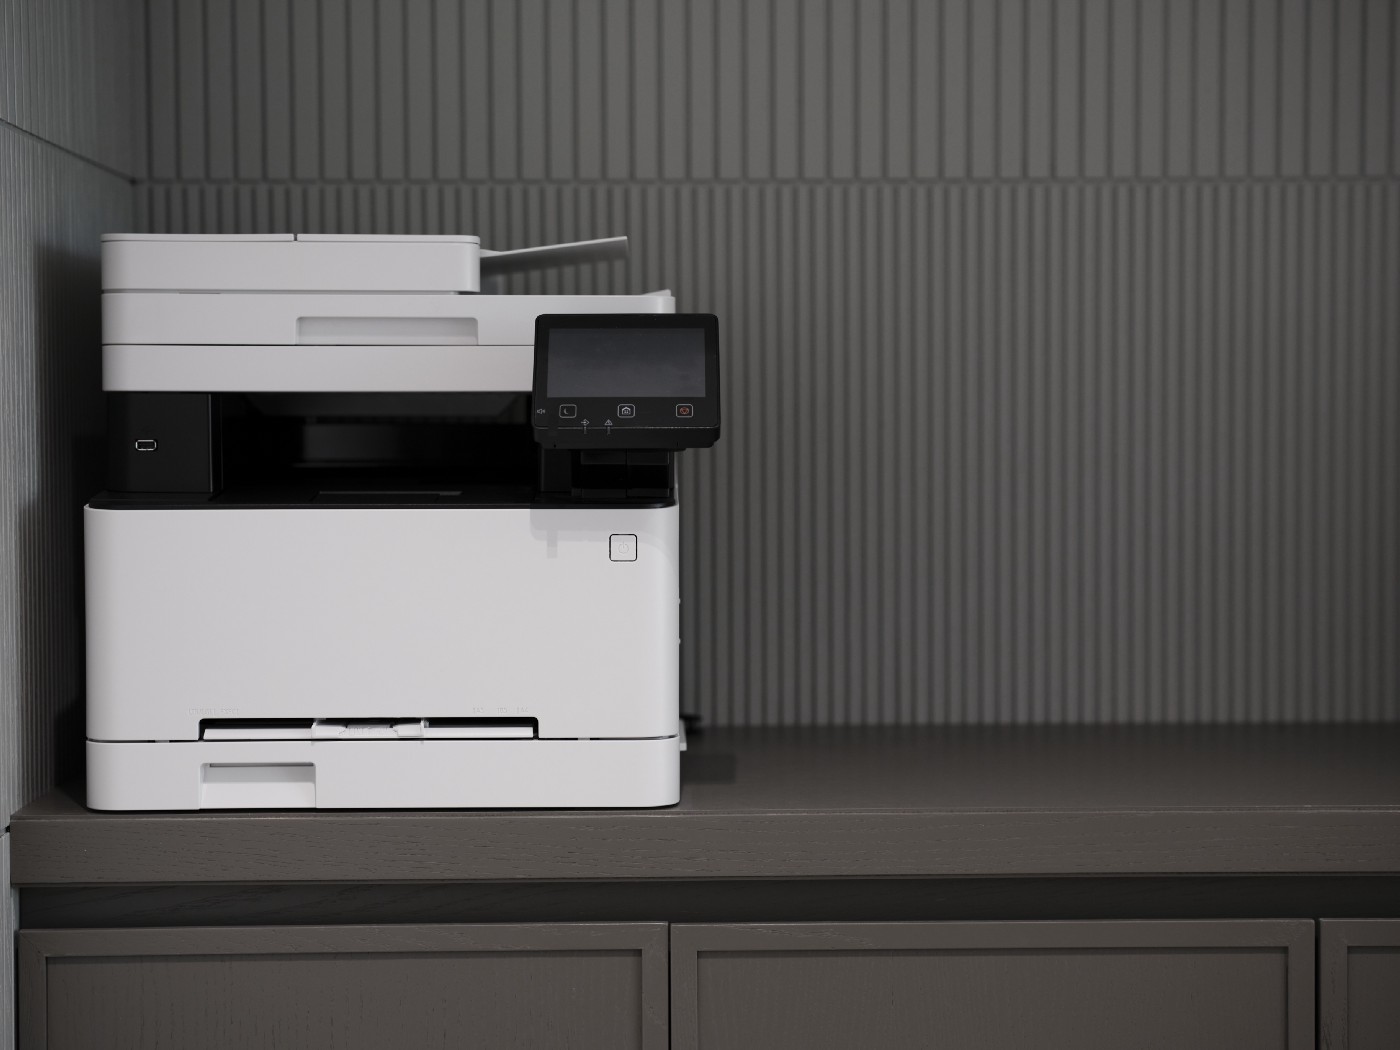 Photo of a printer by engin akyurt on Unsplash